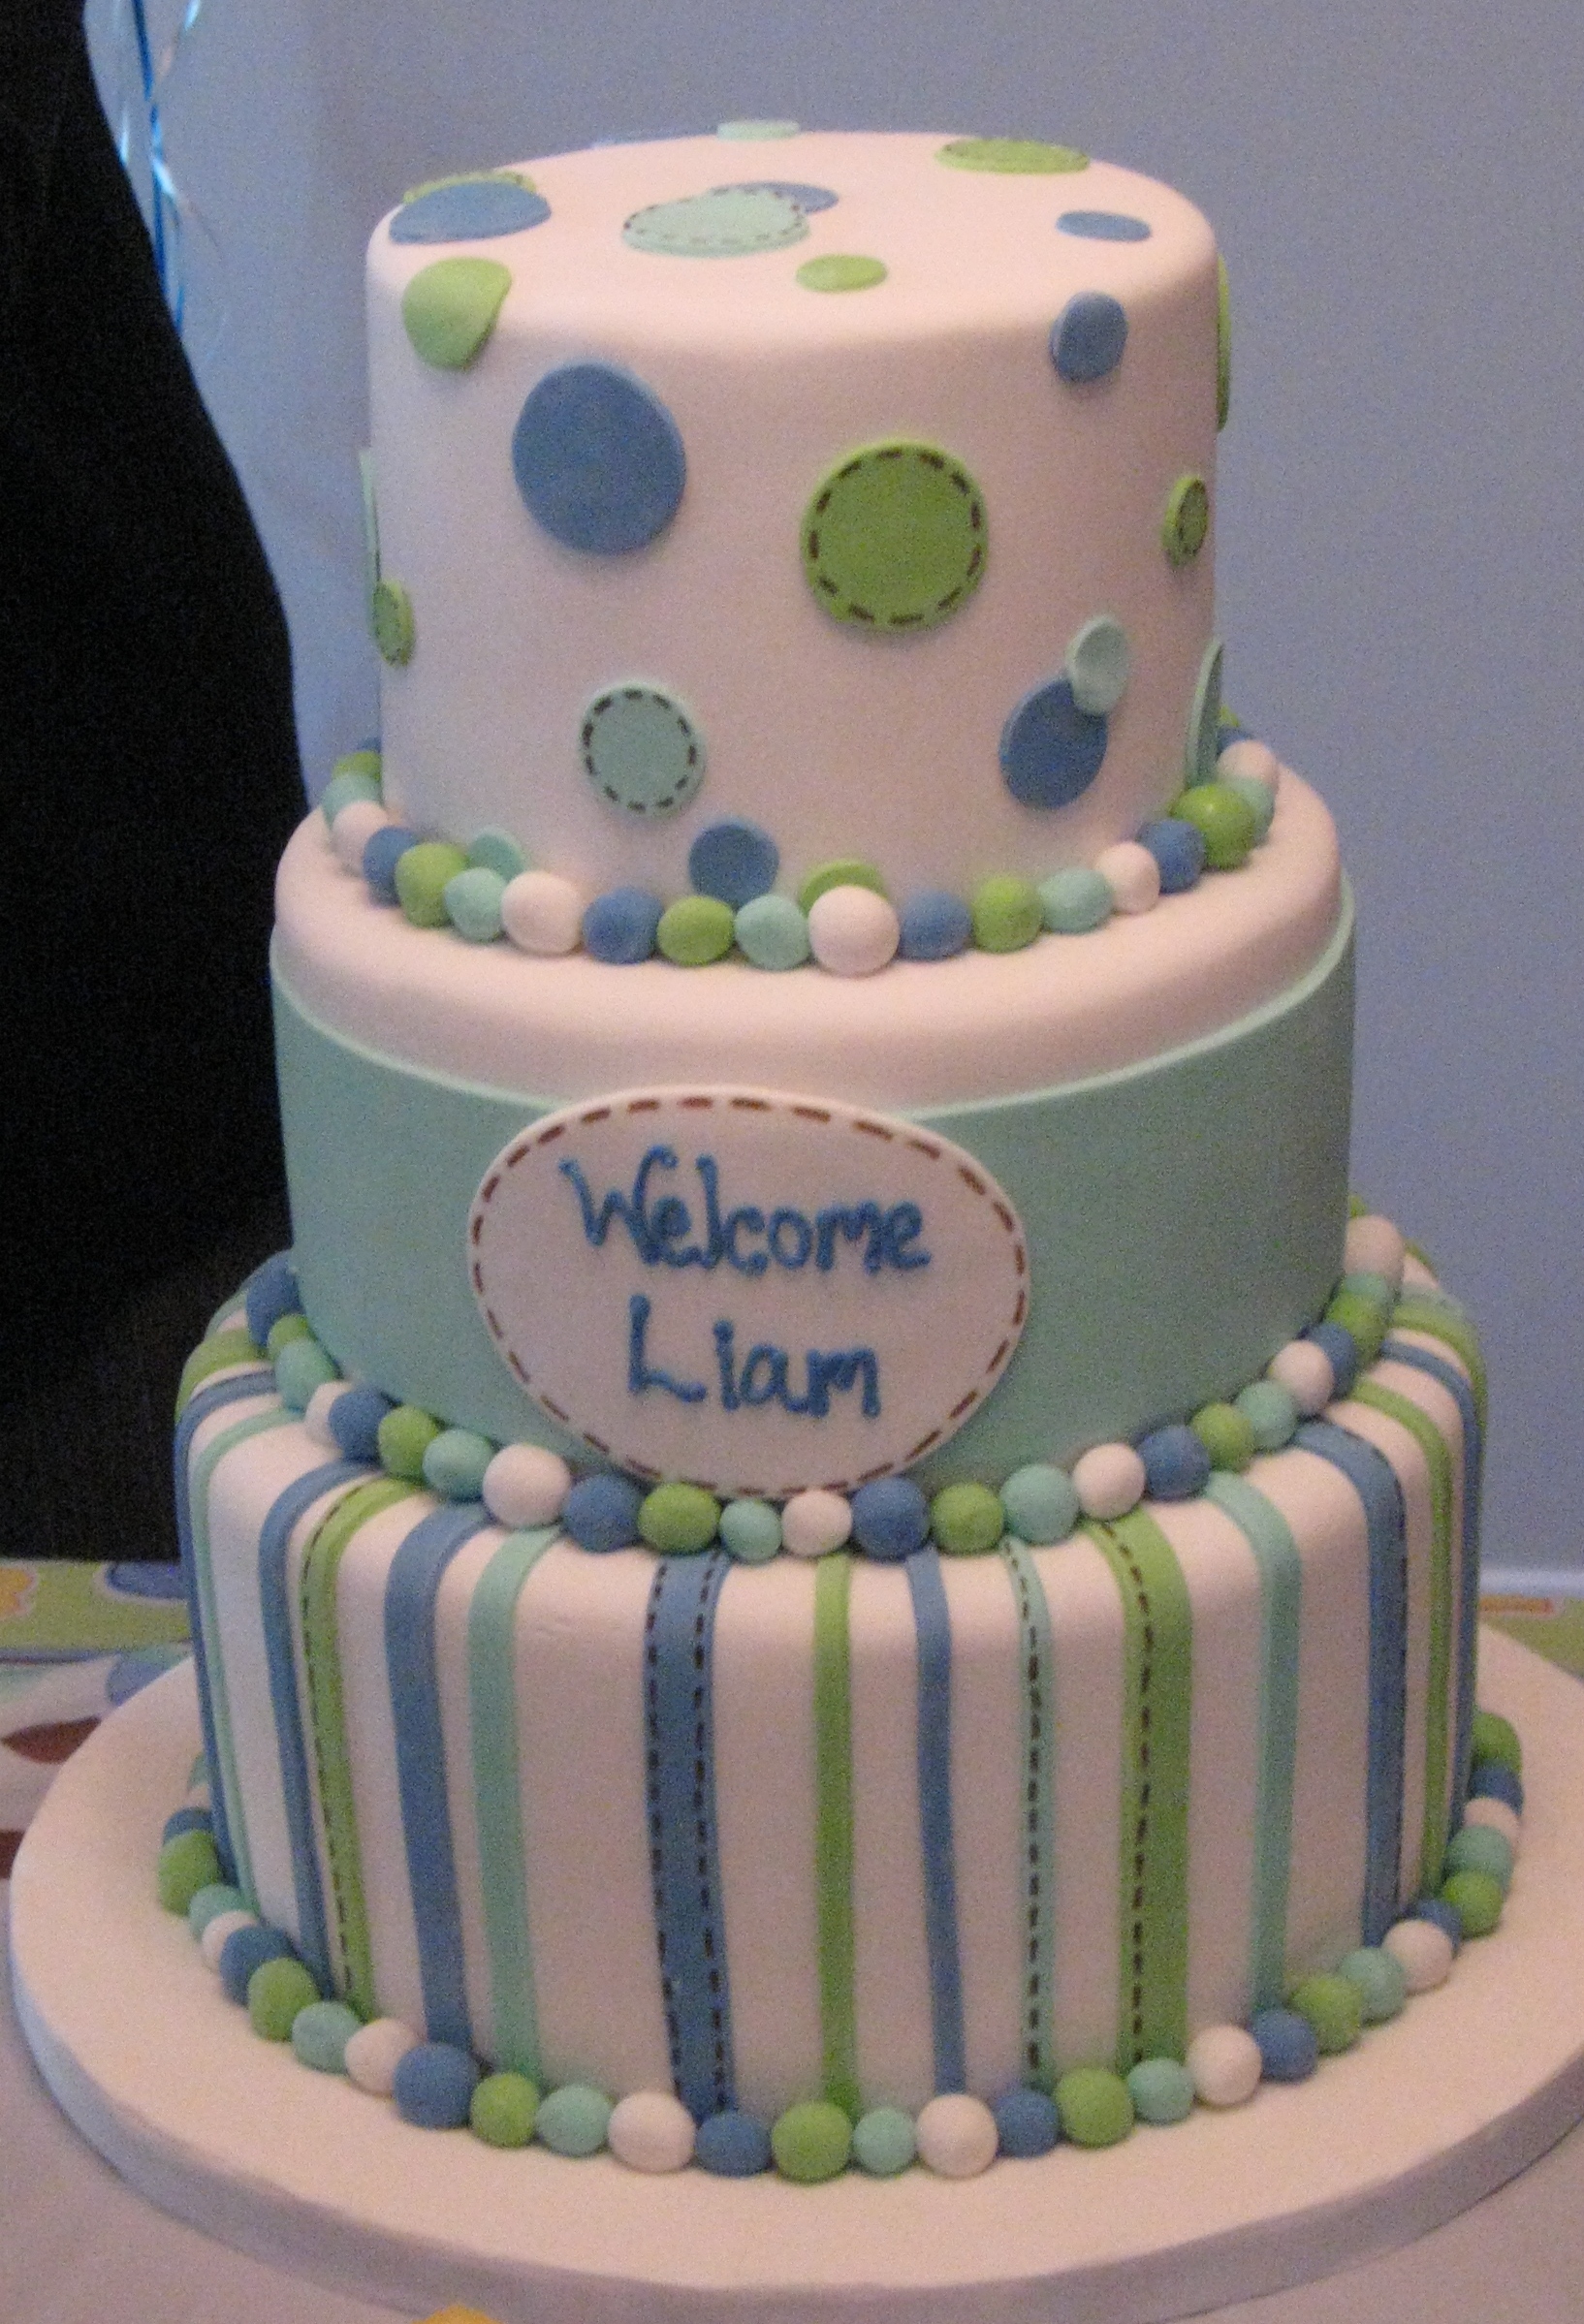 Liam's Baby Shower Cake